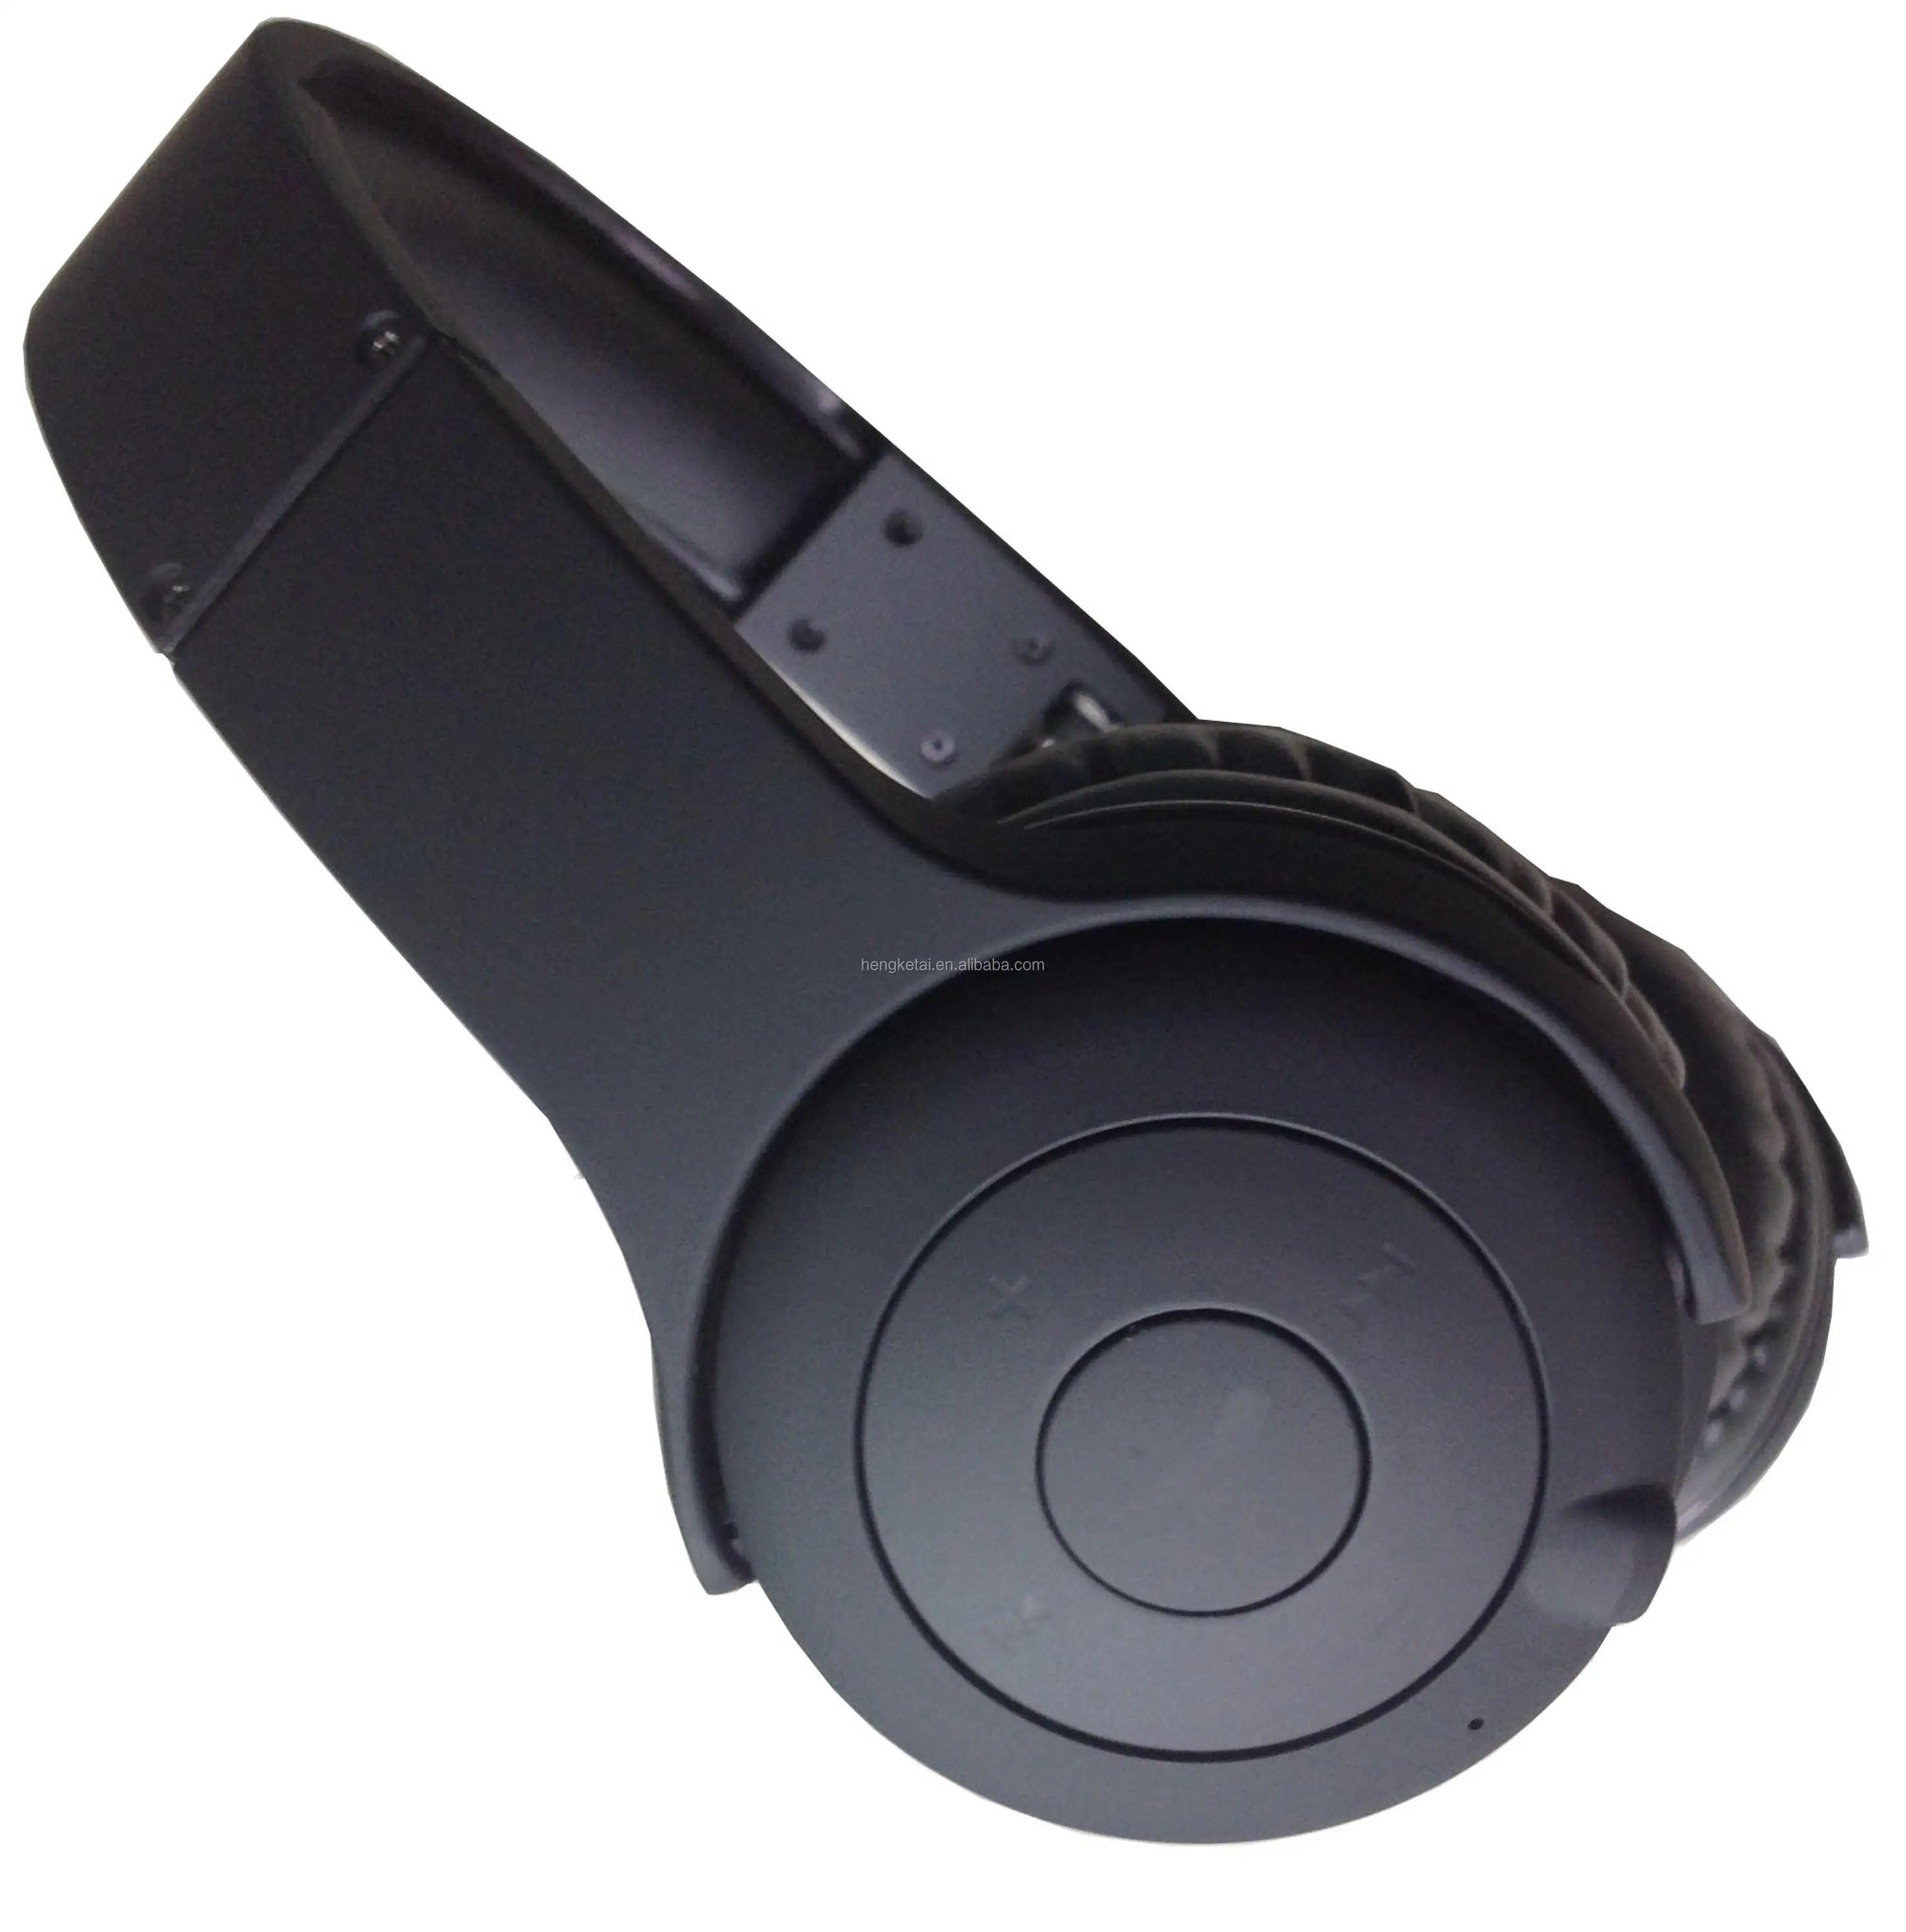 Wireless Bluetooth Earbuds Headphones Wireless Bluetooth Headphones Price In With External Spkeakers Buy Headphones Price In Bluetooth Wireless Headphones Cheap Bluetooth Stereo Headphones Product On Alibaba Com